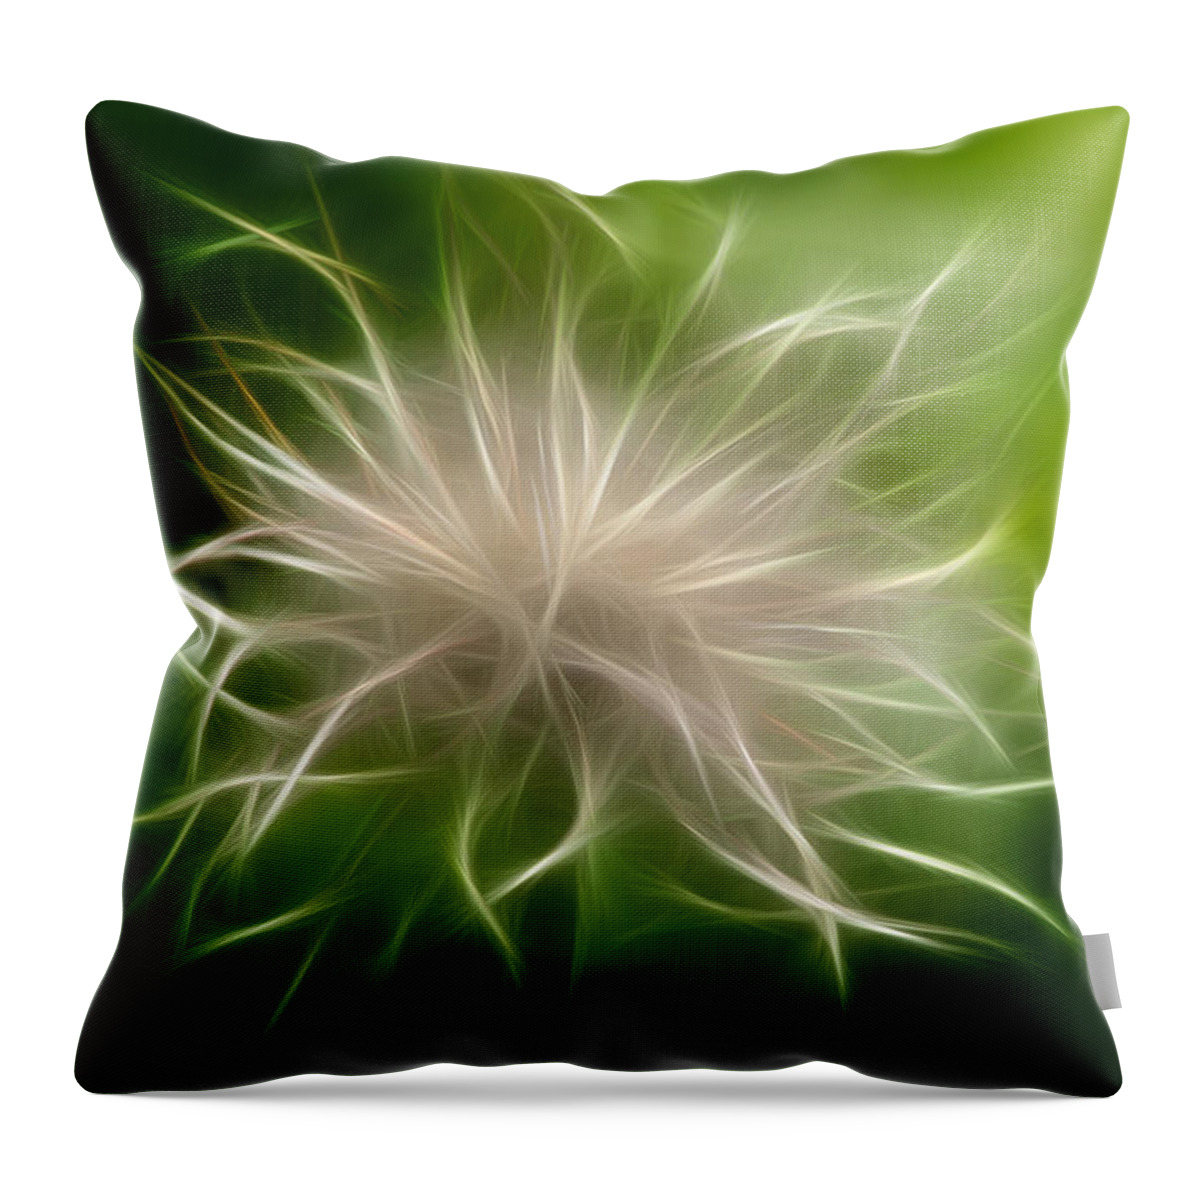 Weed Throw Pillow featuring the digital art Whisper by Teresa Zieba